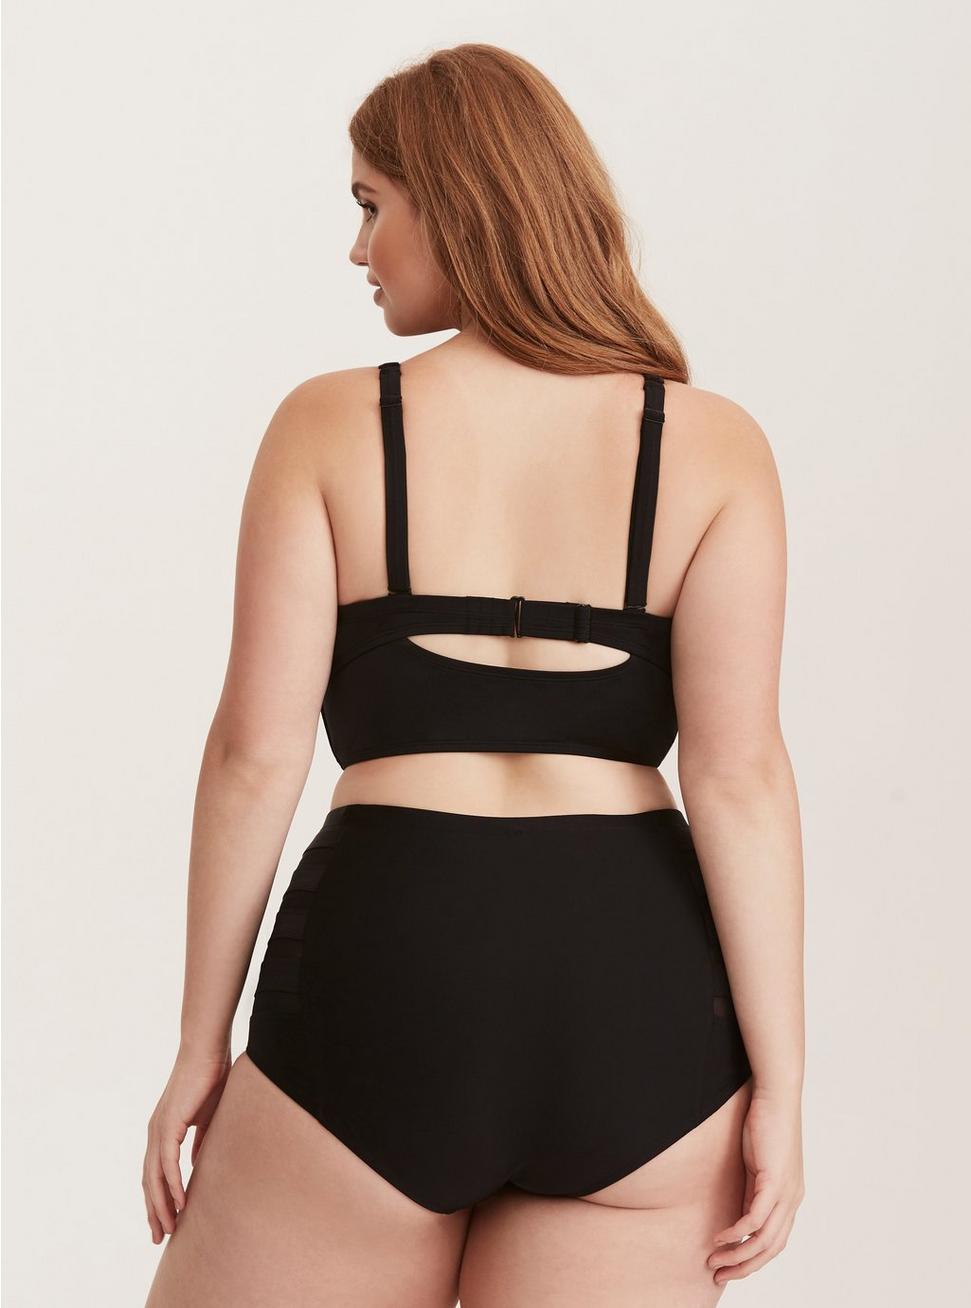 Plus Size - Black Caged Push-Up Balconette Bikini Top - Torrid